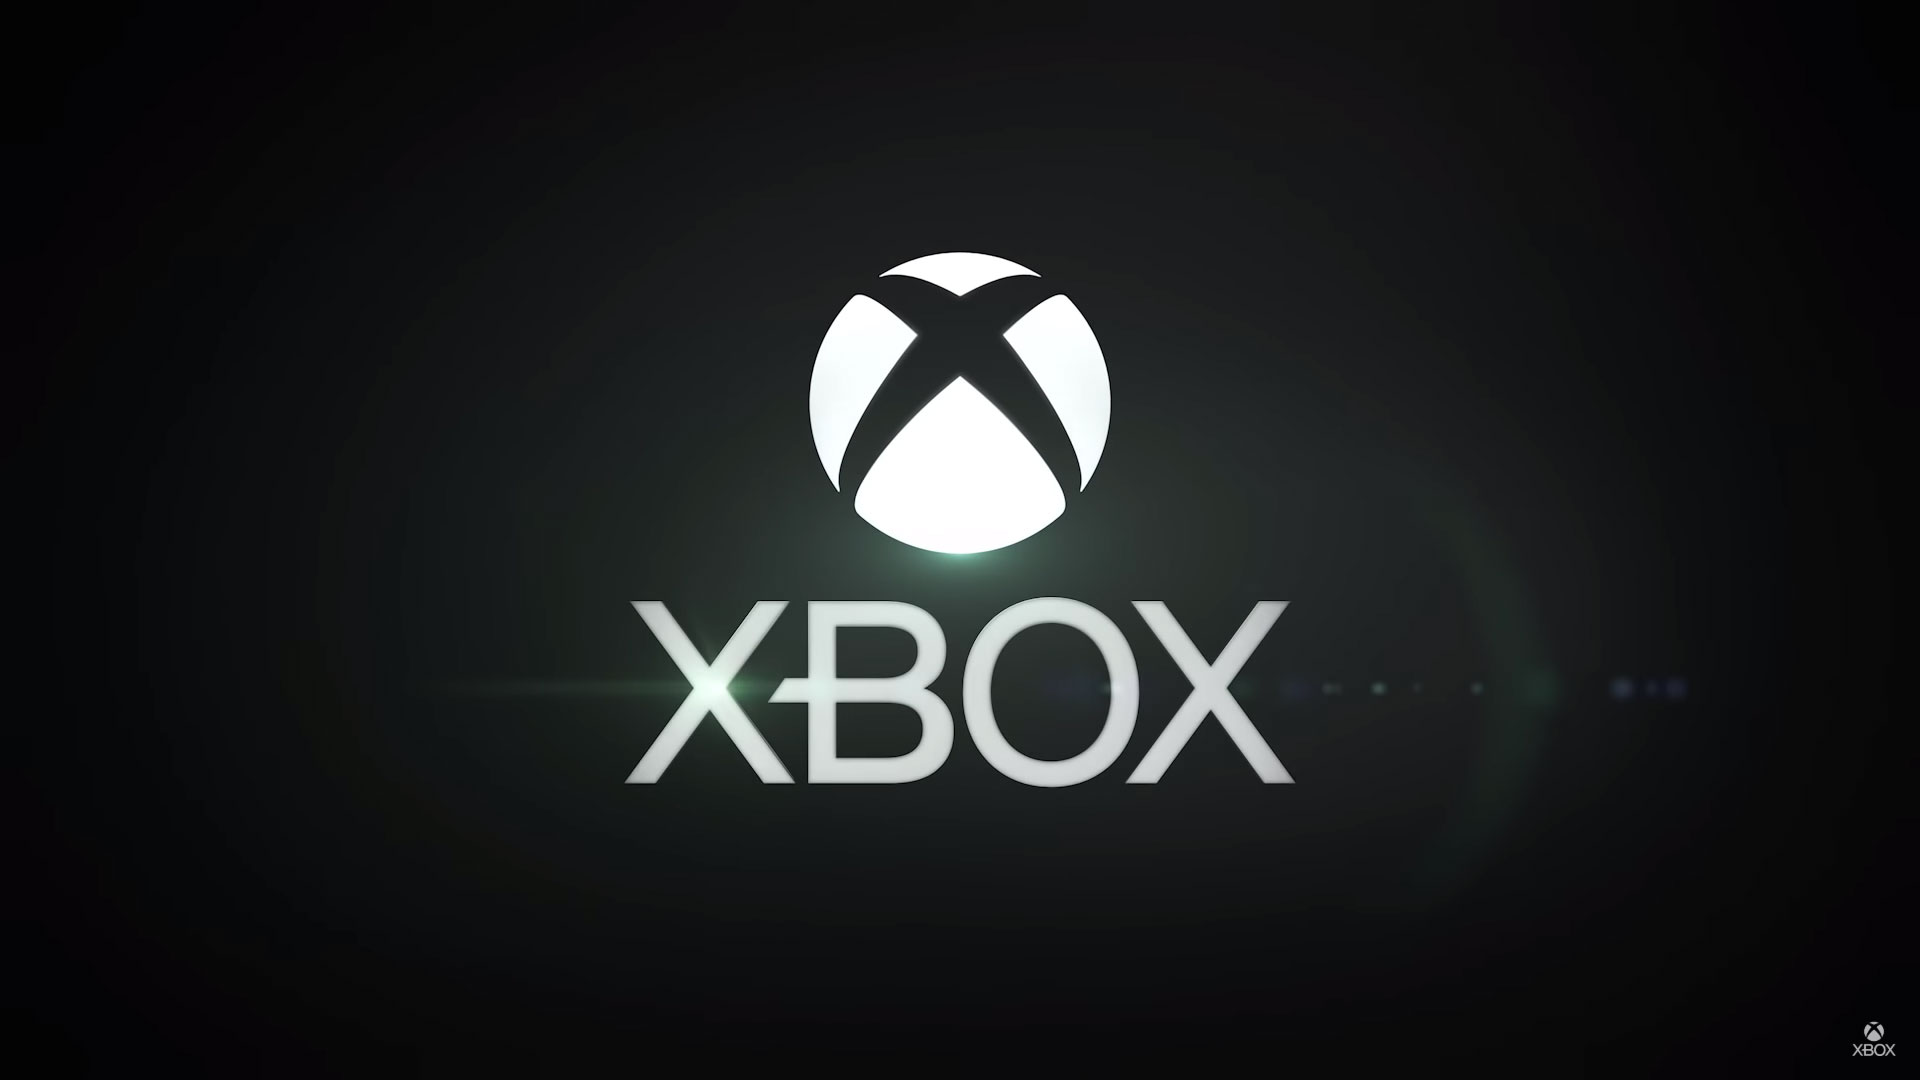 Xbox Live will soon allow custom profile pics - The Verge